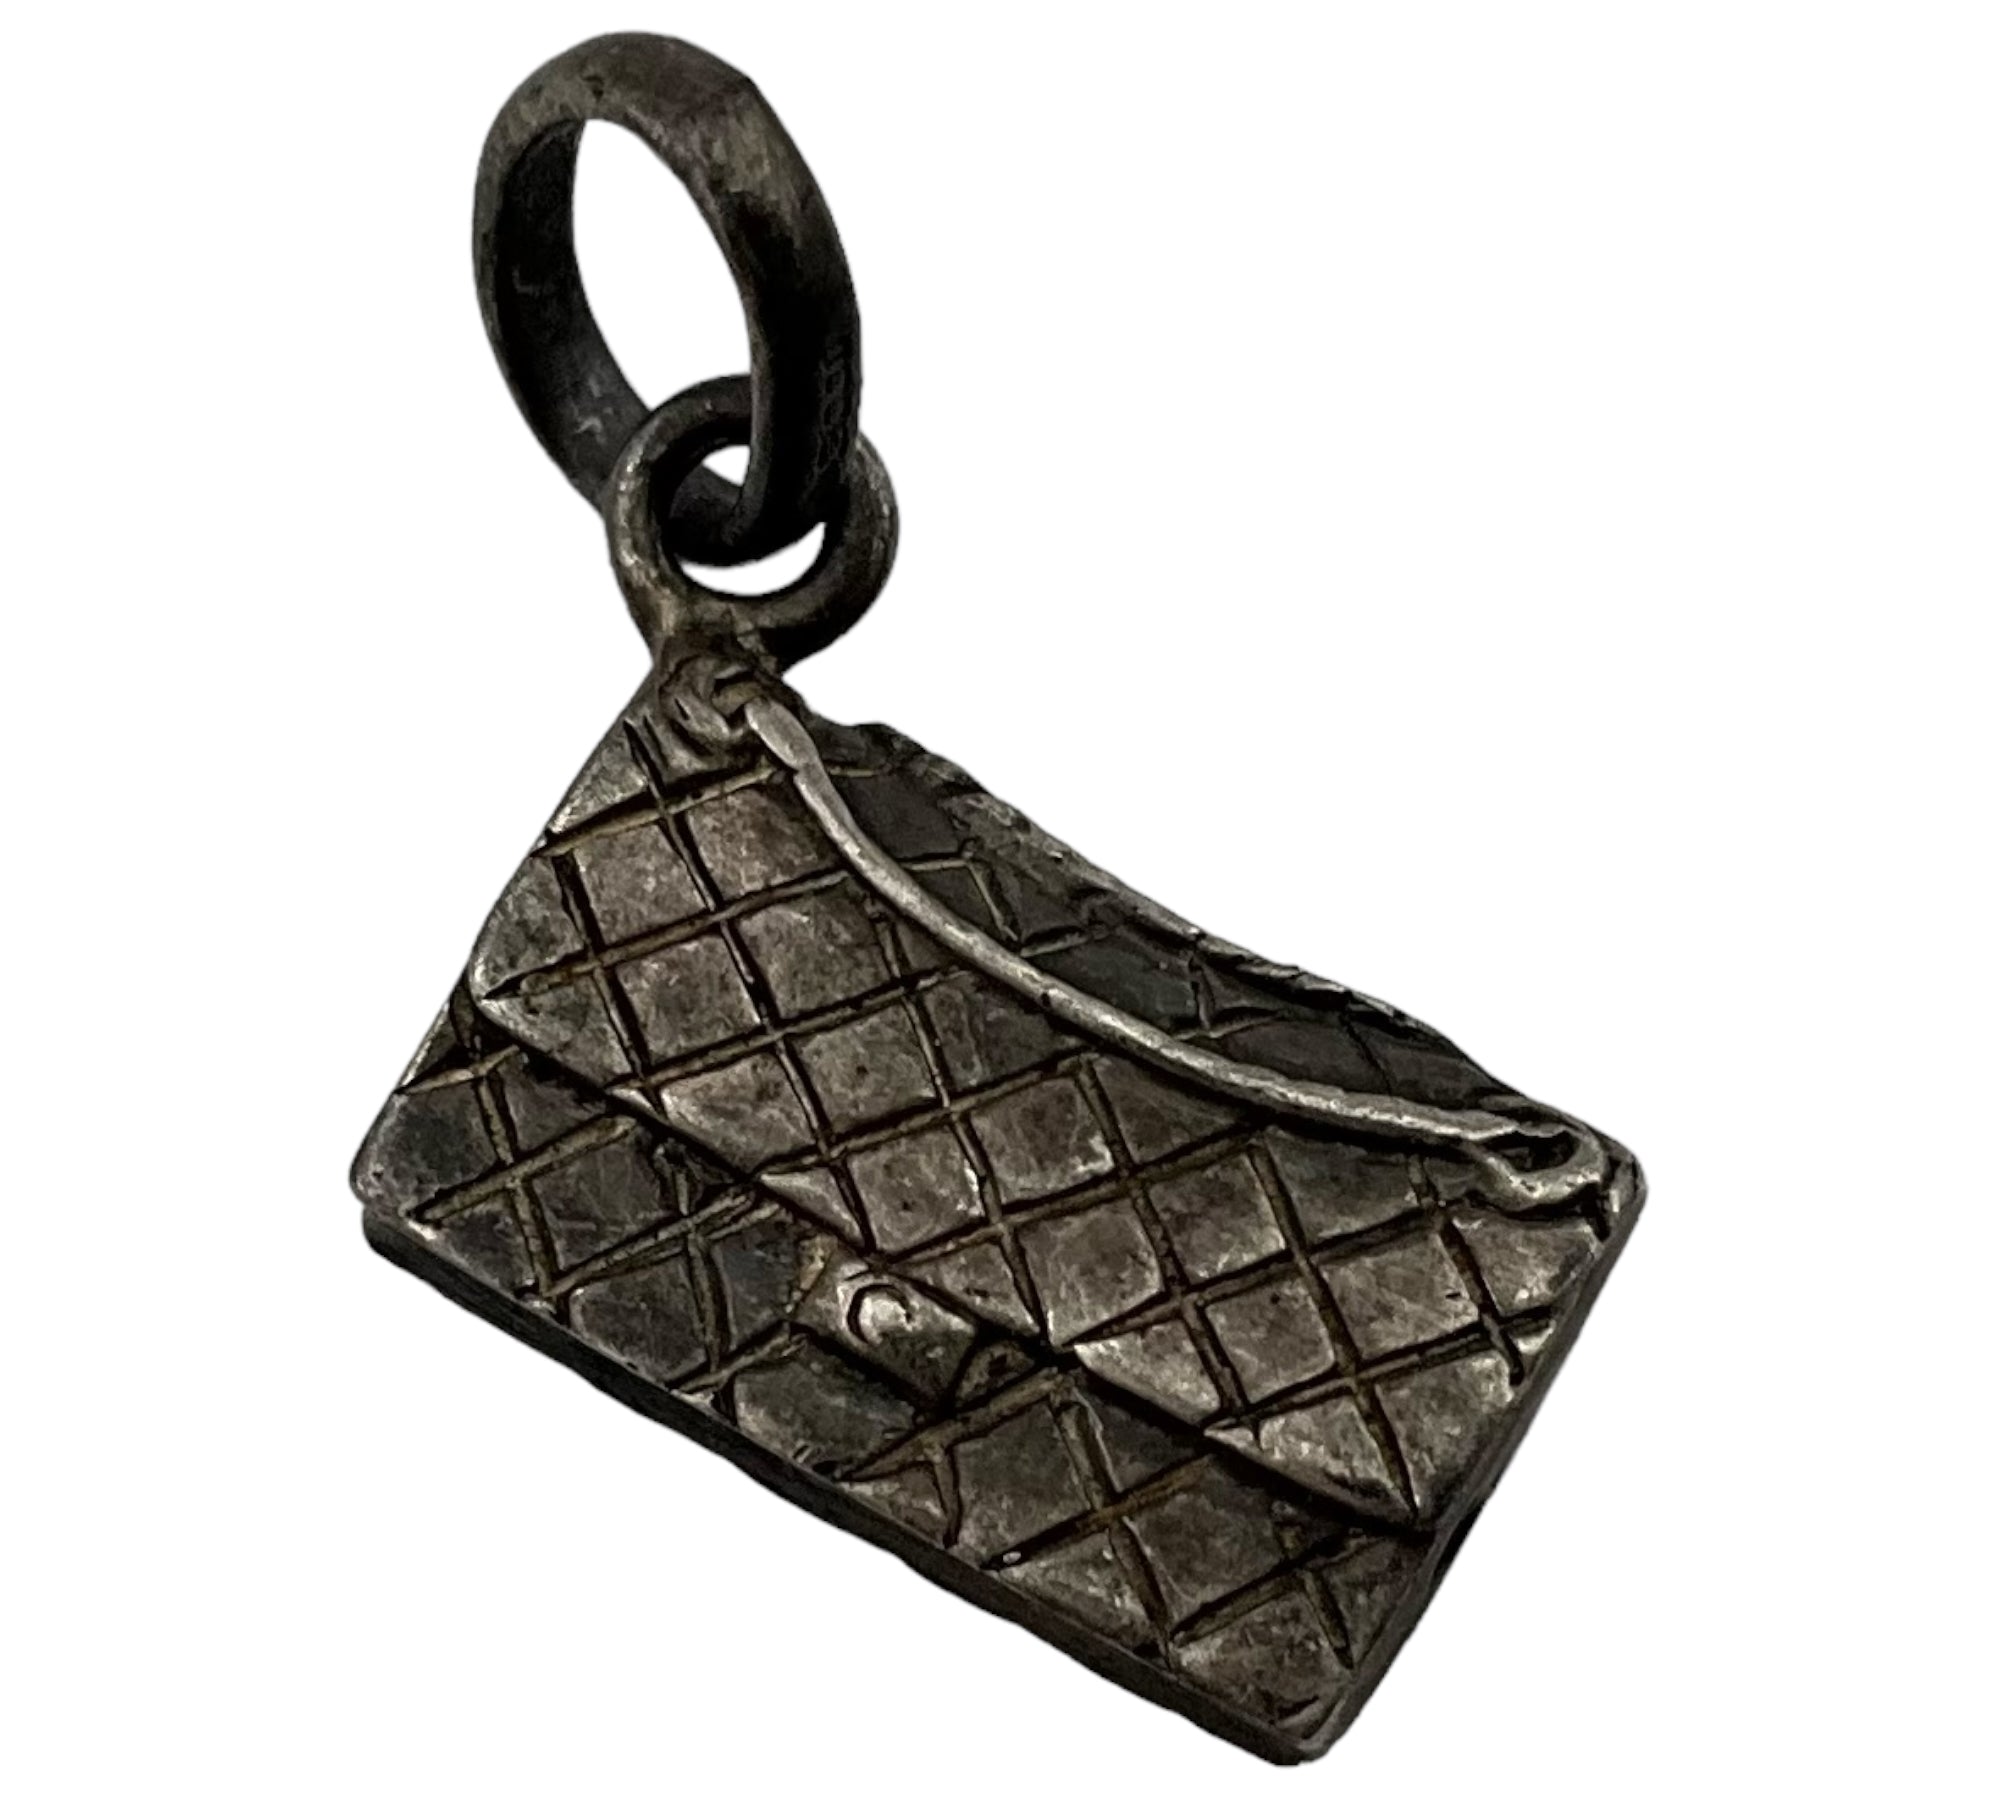 sterling silver purse clutch pendant